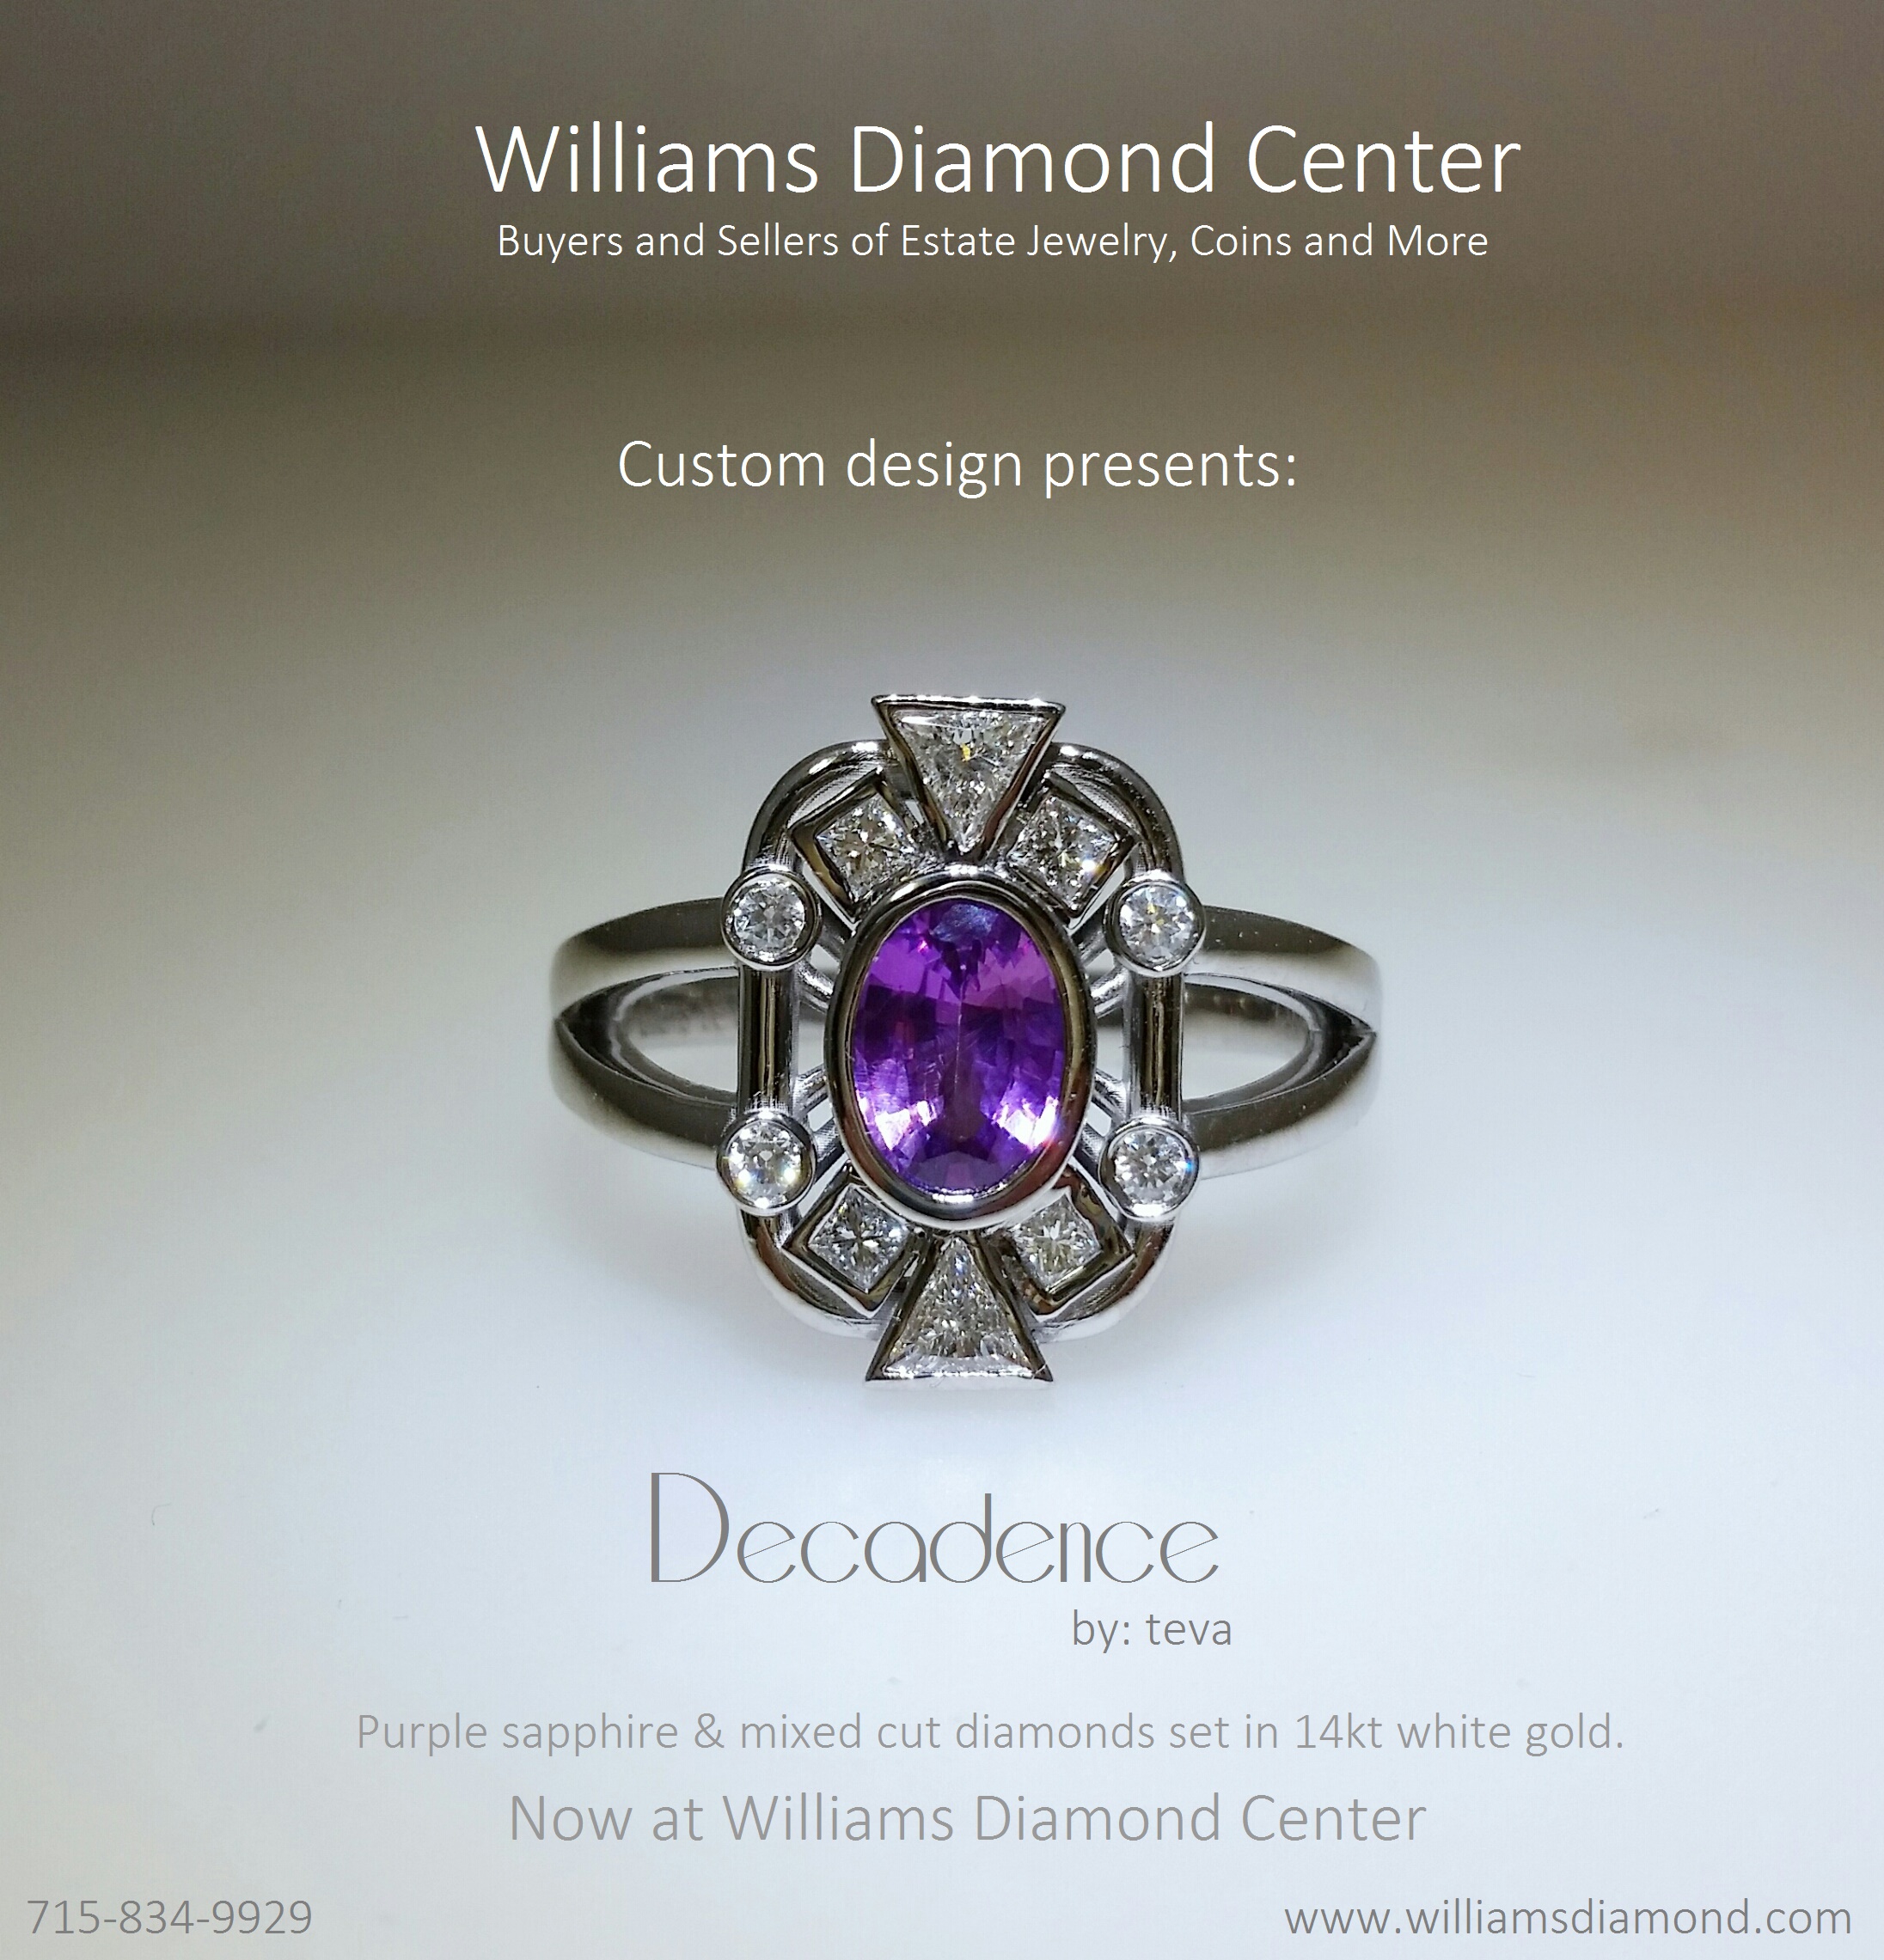 Decadence Sapphire diamond ring.jpg